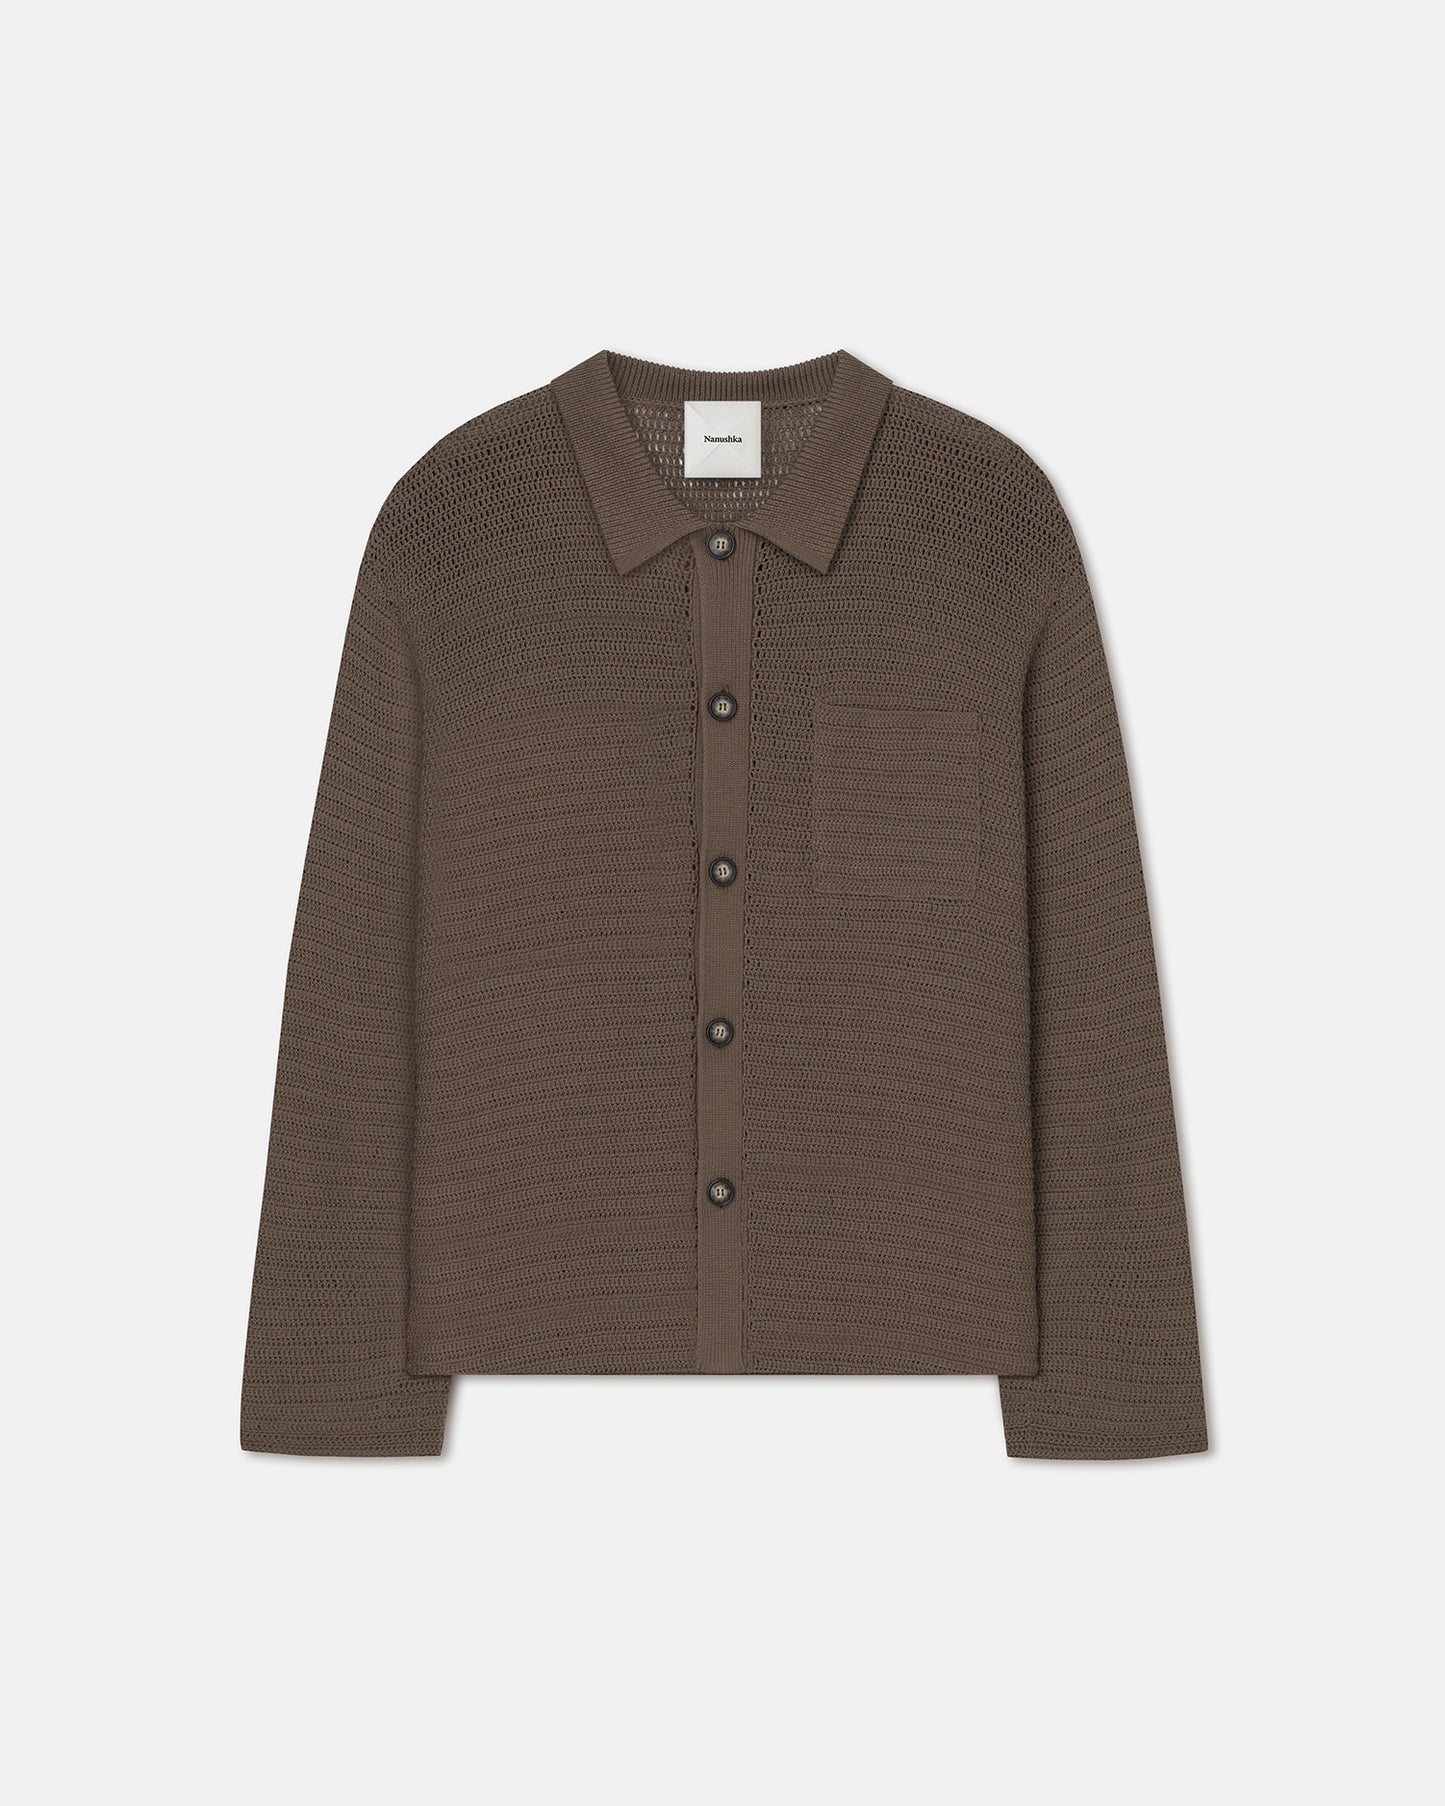 Nicolas - Linear Crochet Shirt - Fossil Brown